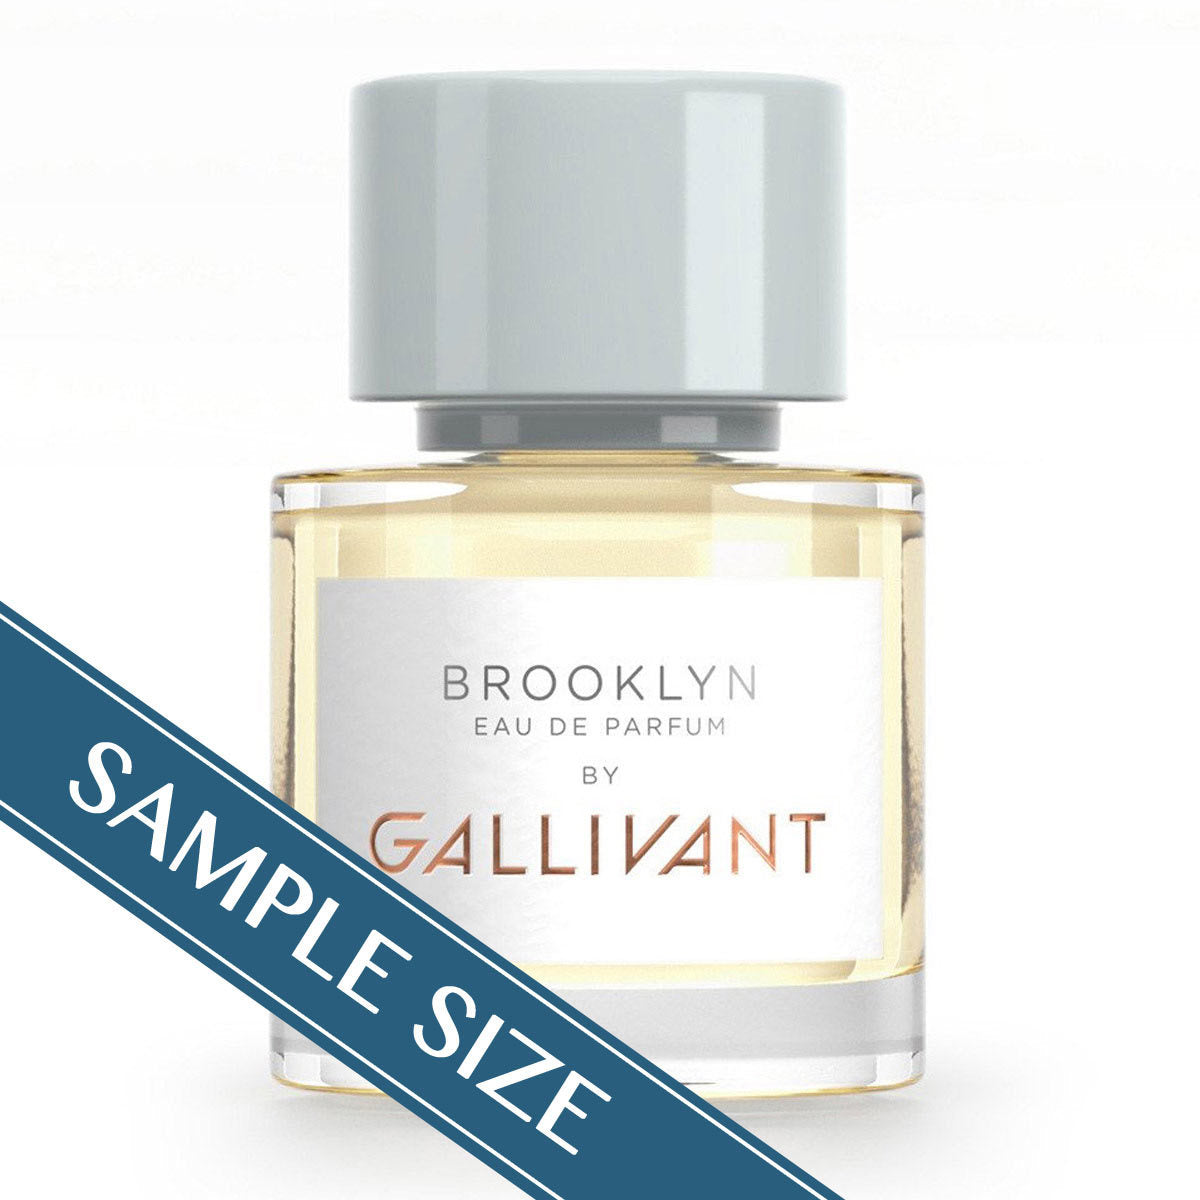 Primary image of Sample - Brooklyn Eau de Parfum